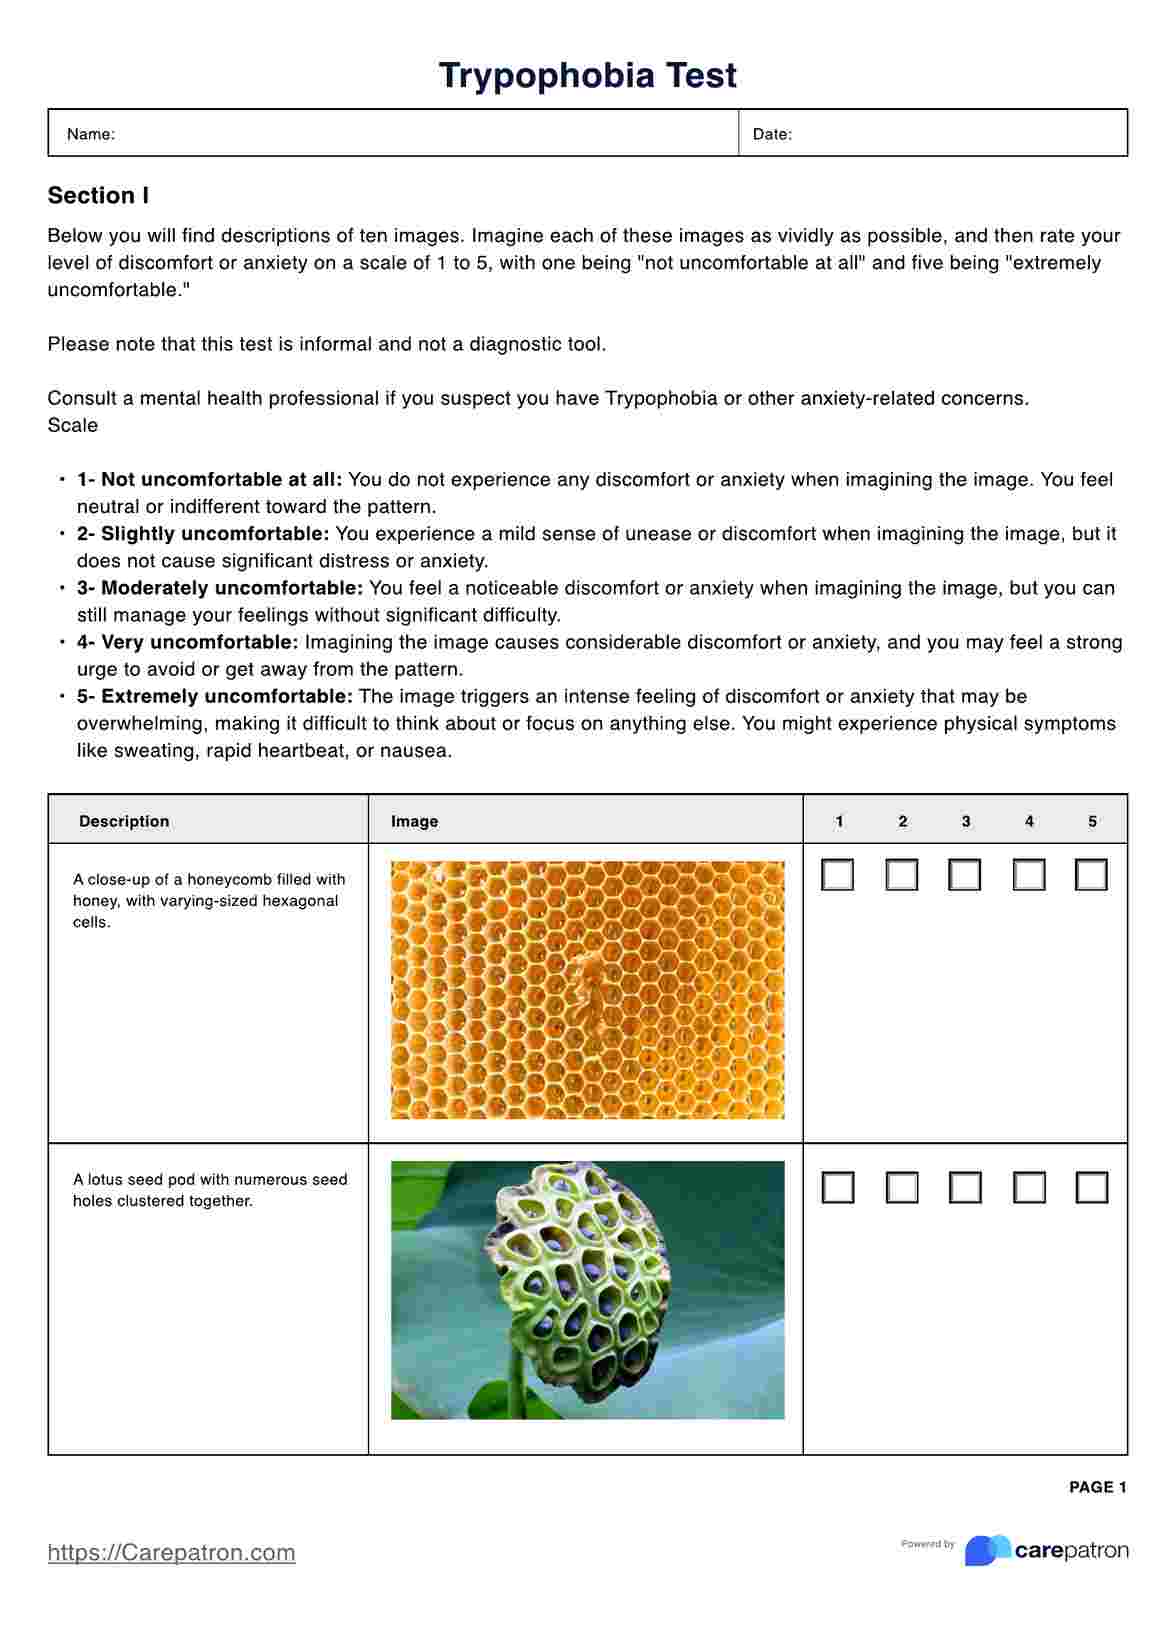 Trypophobia Test PDF Example